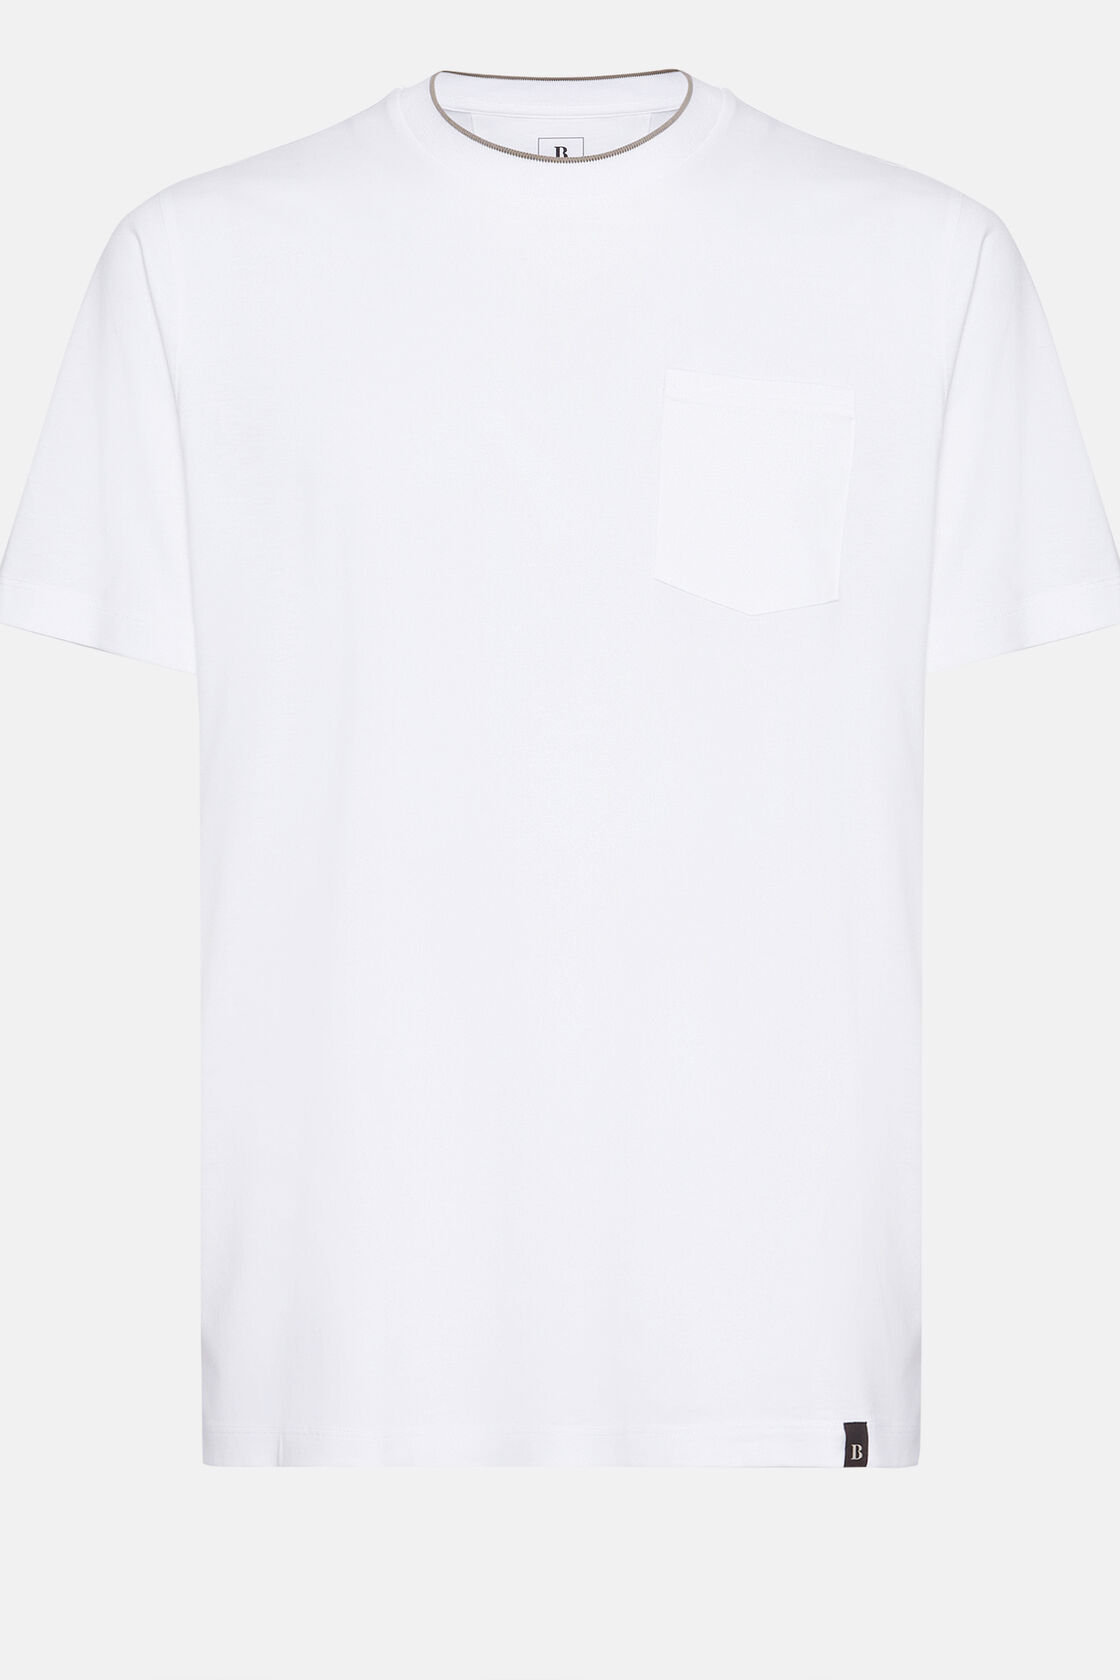 T-Shirt In Jersey Di Cotone Tencel, Bianco, hi-res